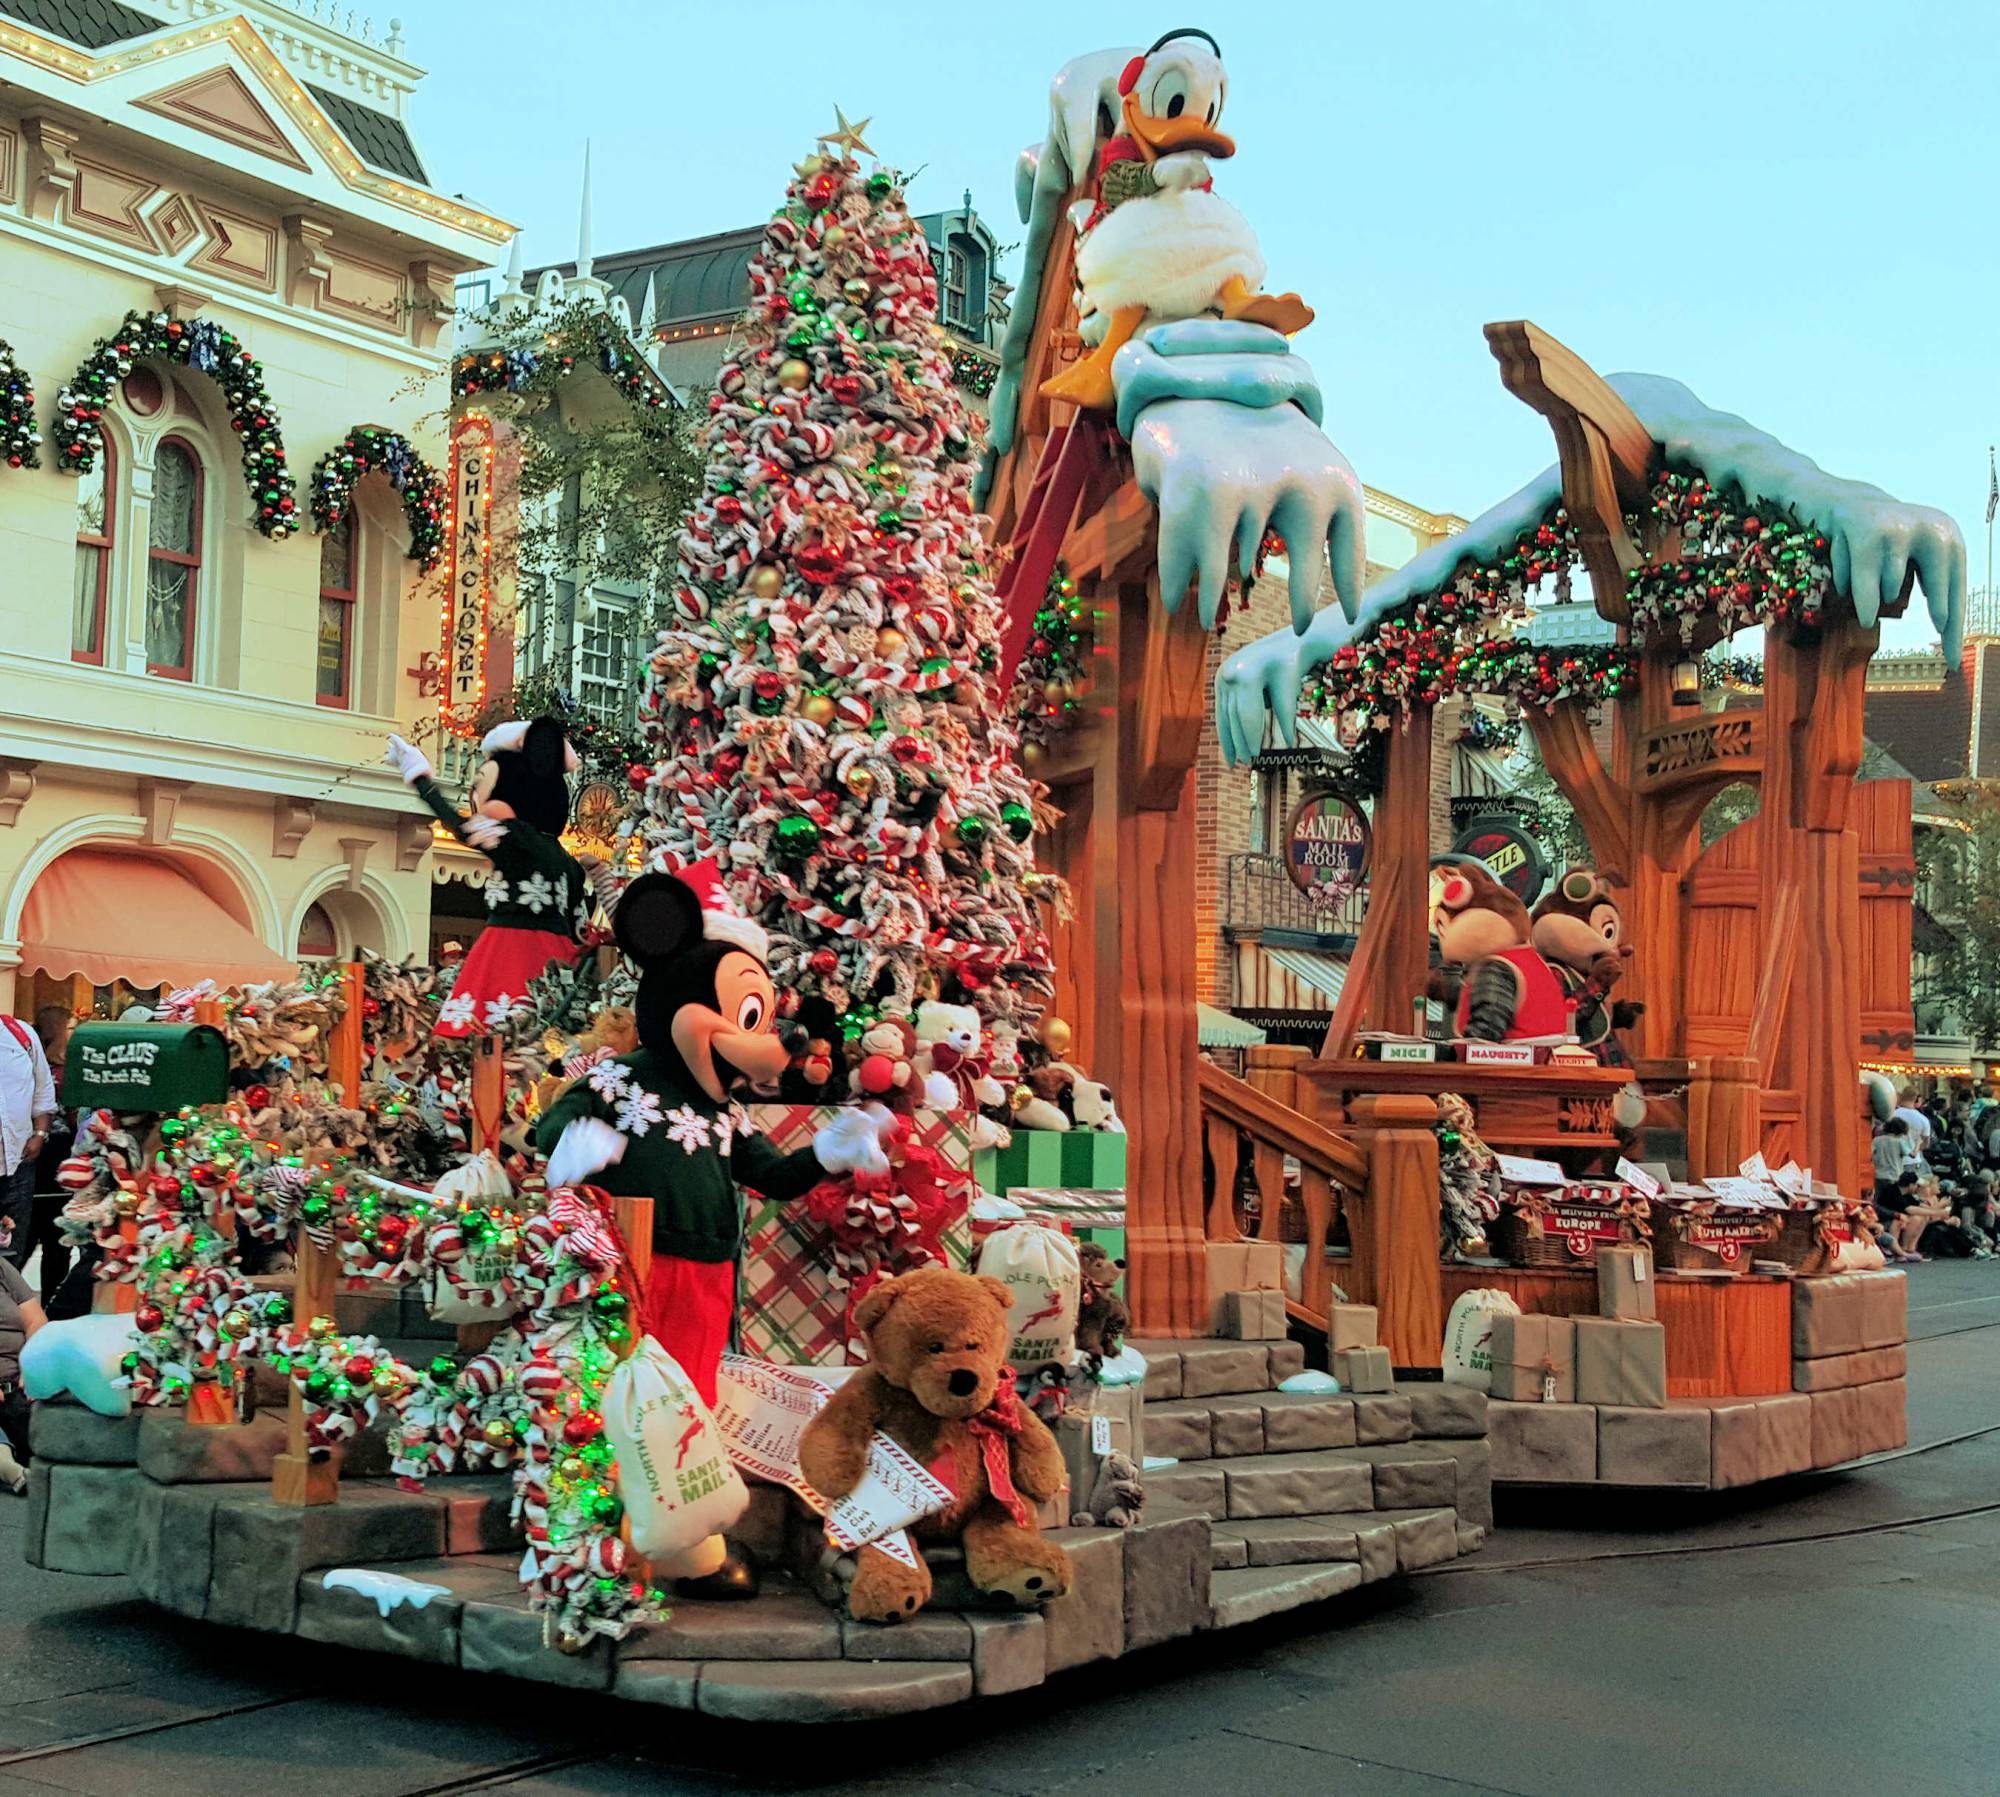 Disneyland Main Street USA Christmas Parade 2015 Mickey, Minnie and Donald